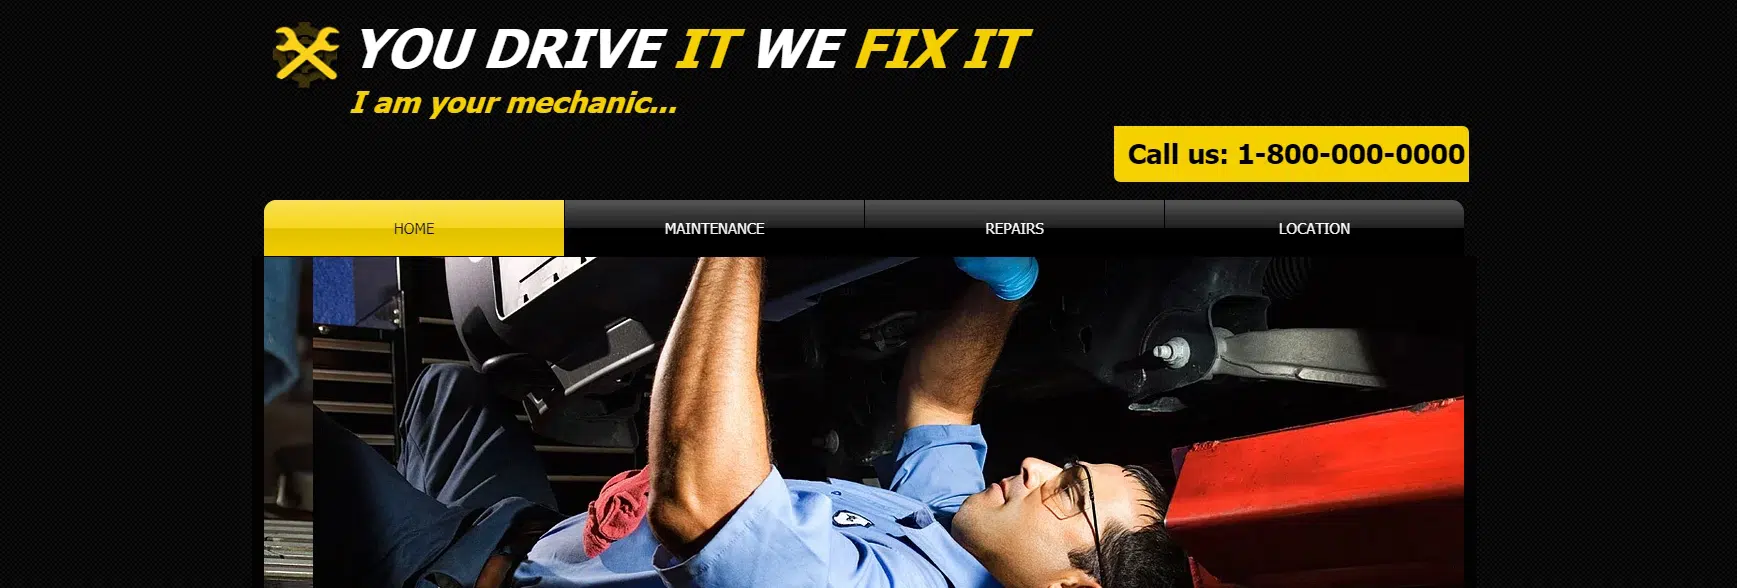 Car Repair Service Website Theme